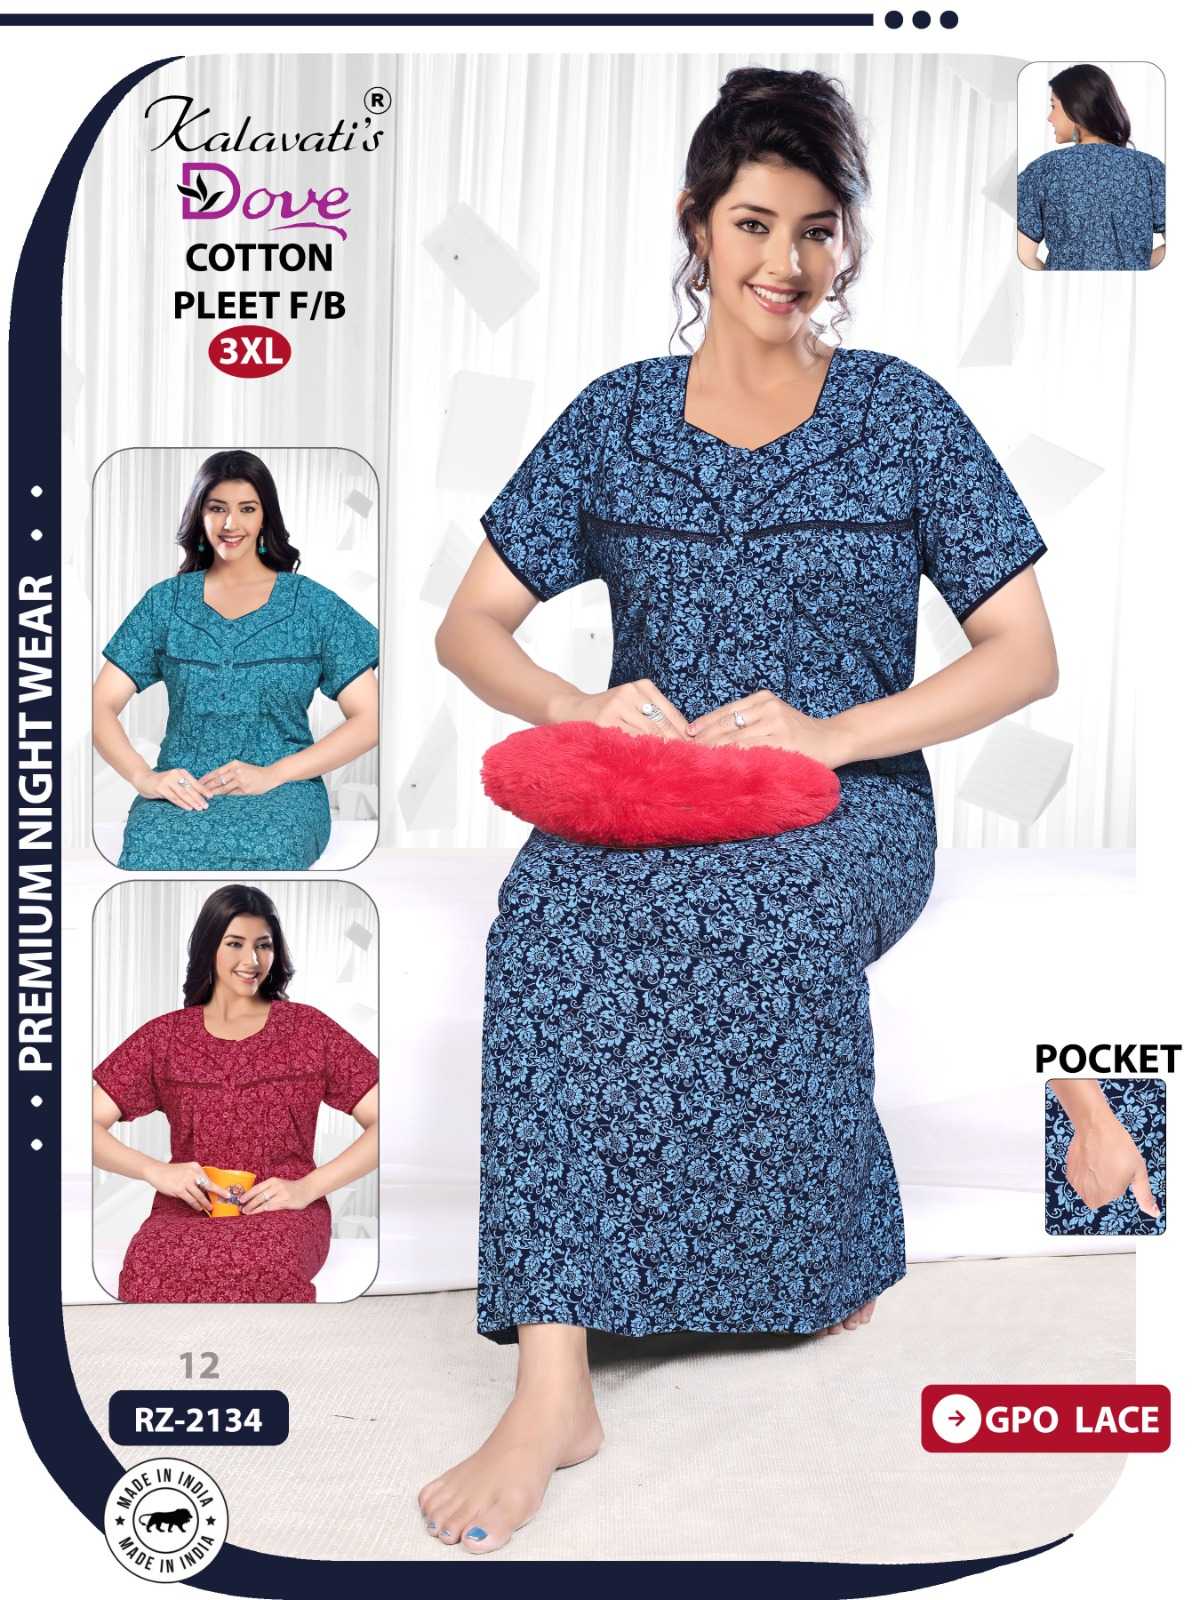 kalavati dove cotton premium full stitch nighty for women at best rate